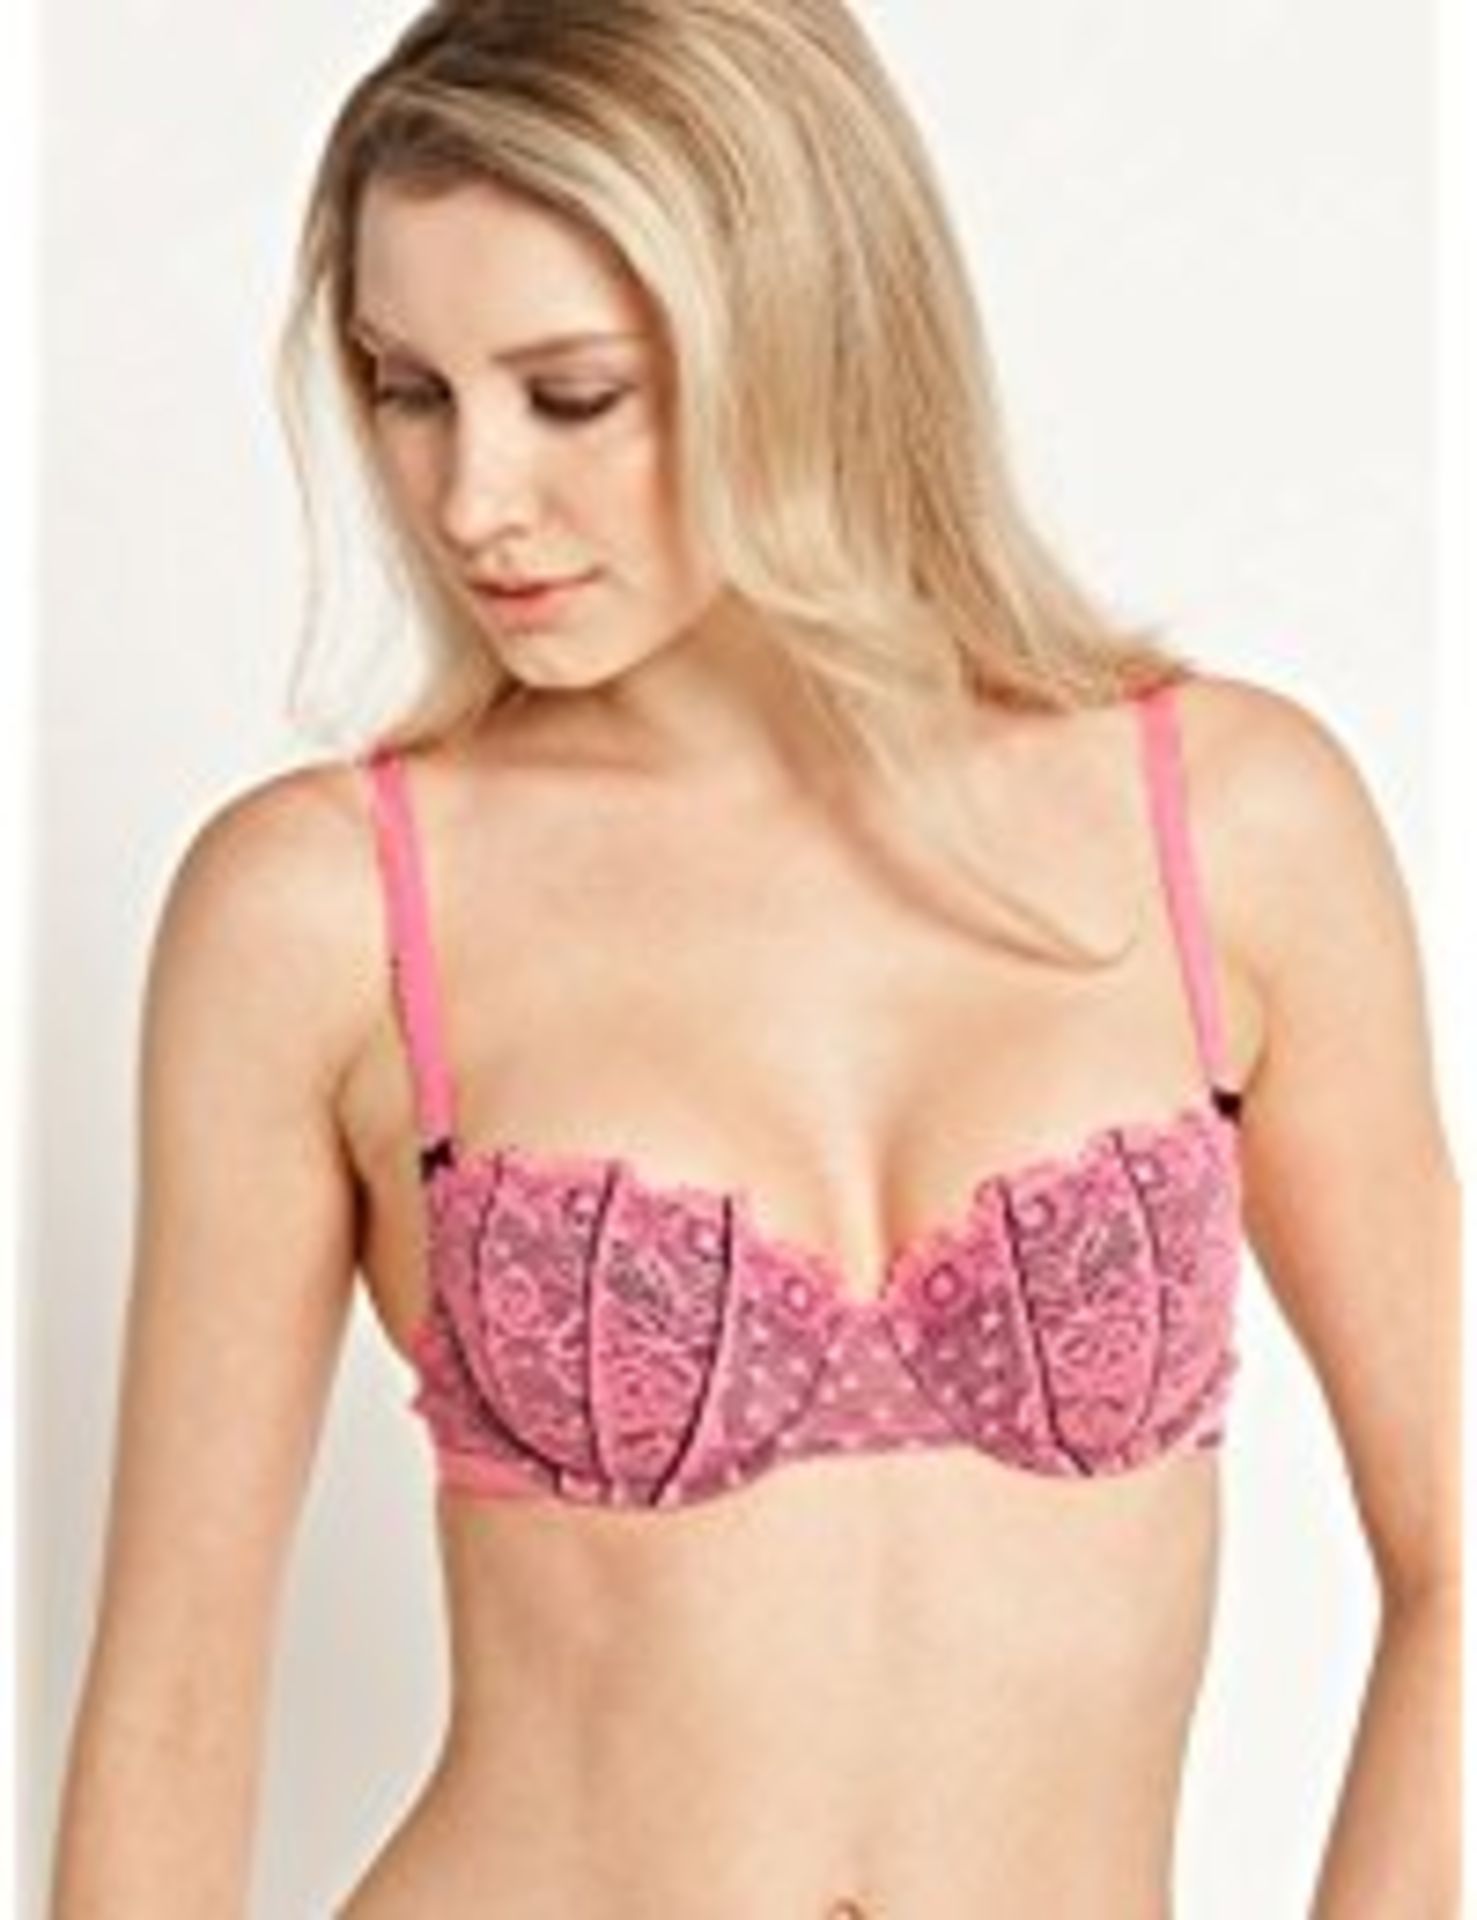 + VAT Brand New A Lot Of Four DKNY Pink/Black Balconette Bras Size 32DD 19.95 Euro Each (Amazon)